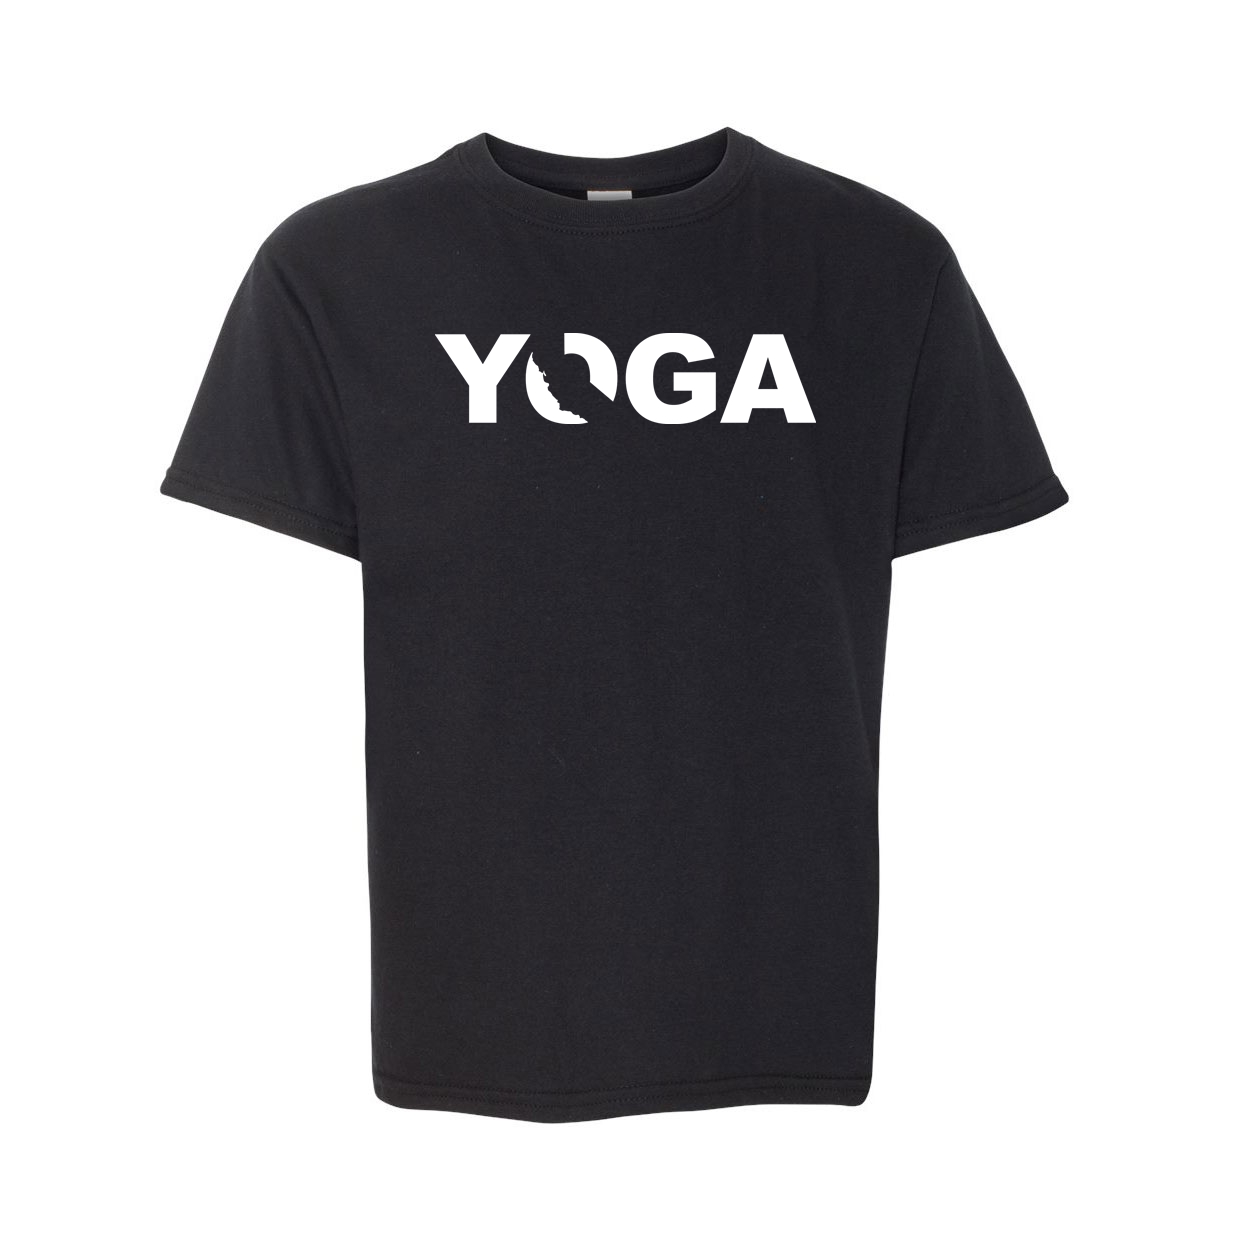 Yoga California Classic Youth T-Shirt Black (White Logo)